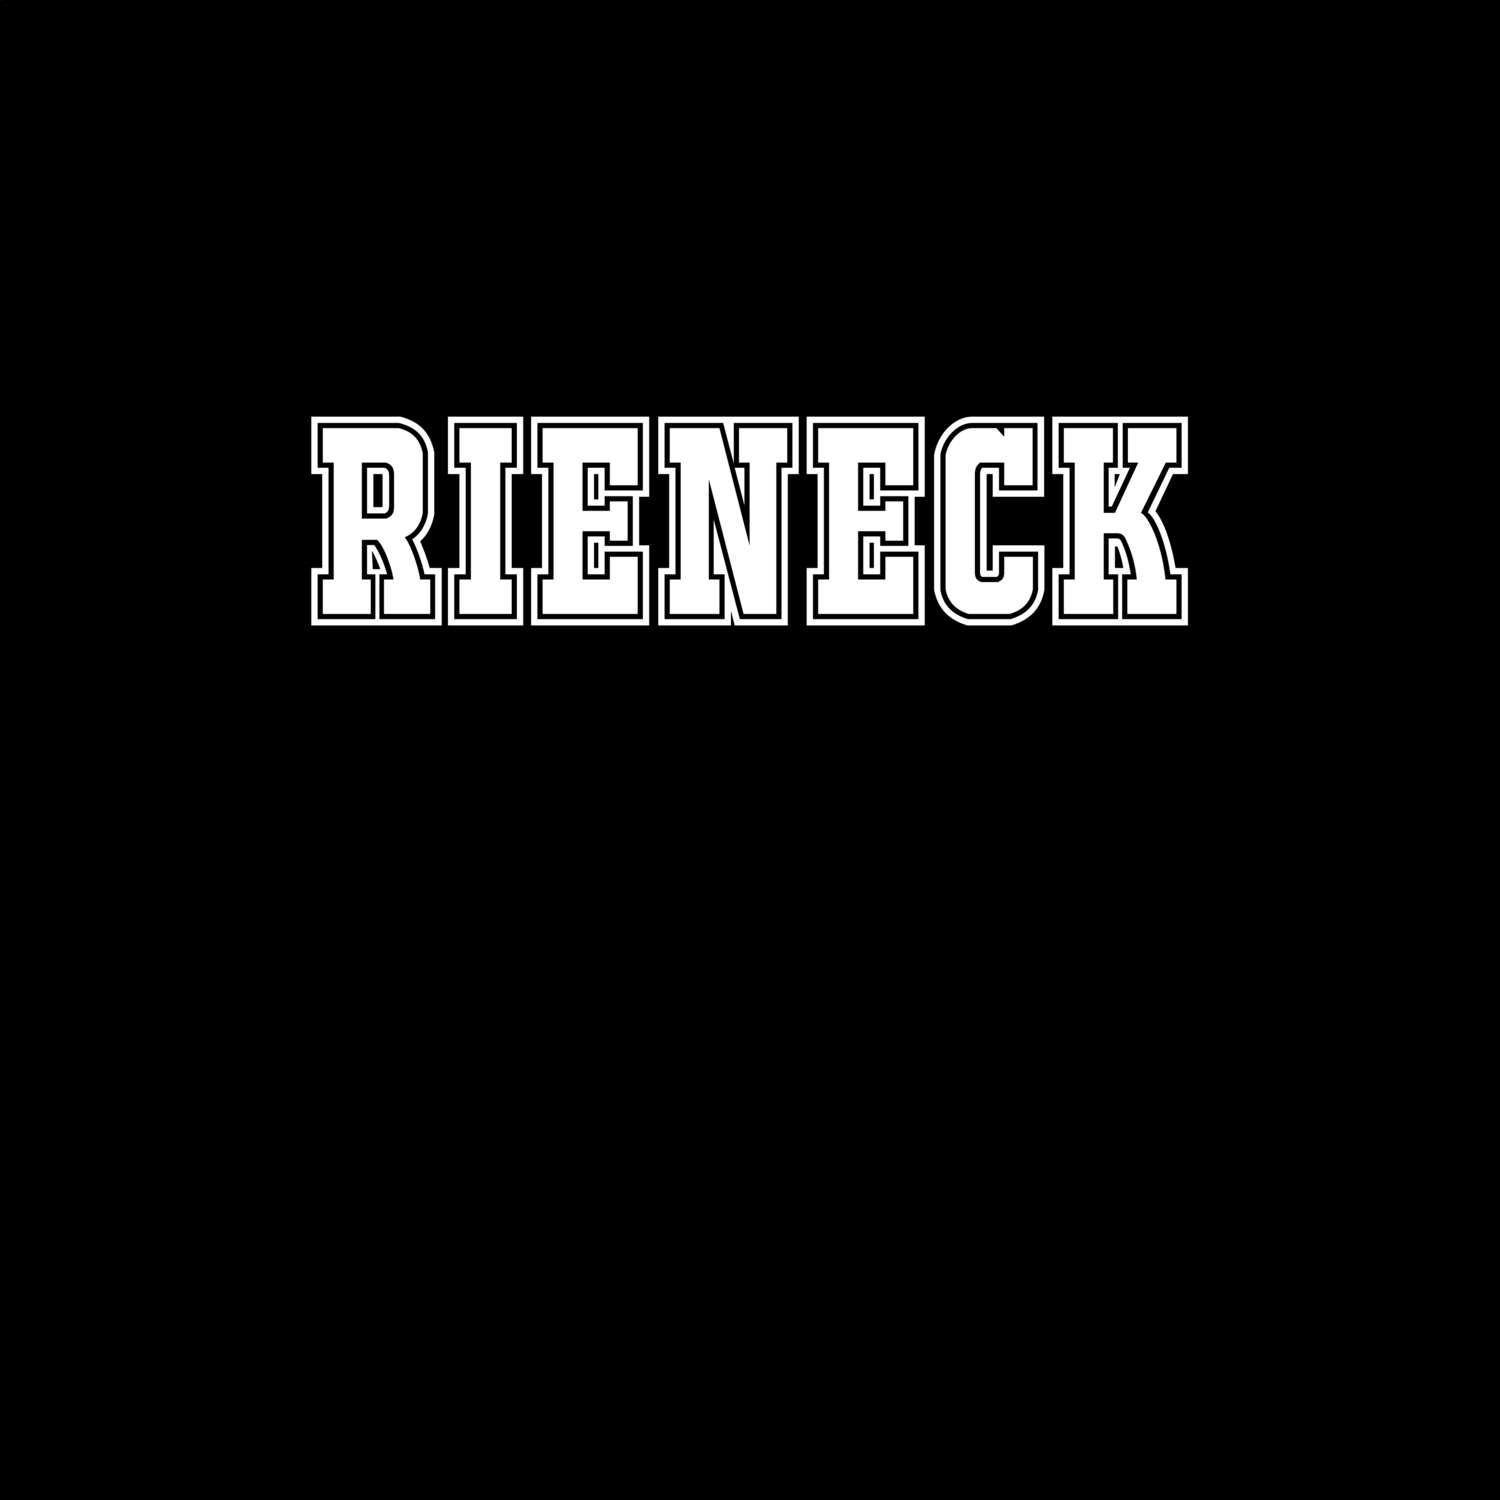 Rieneck T-Shirt »Classic«